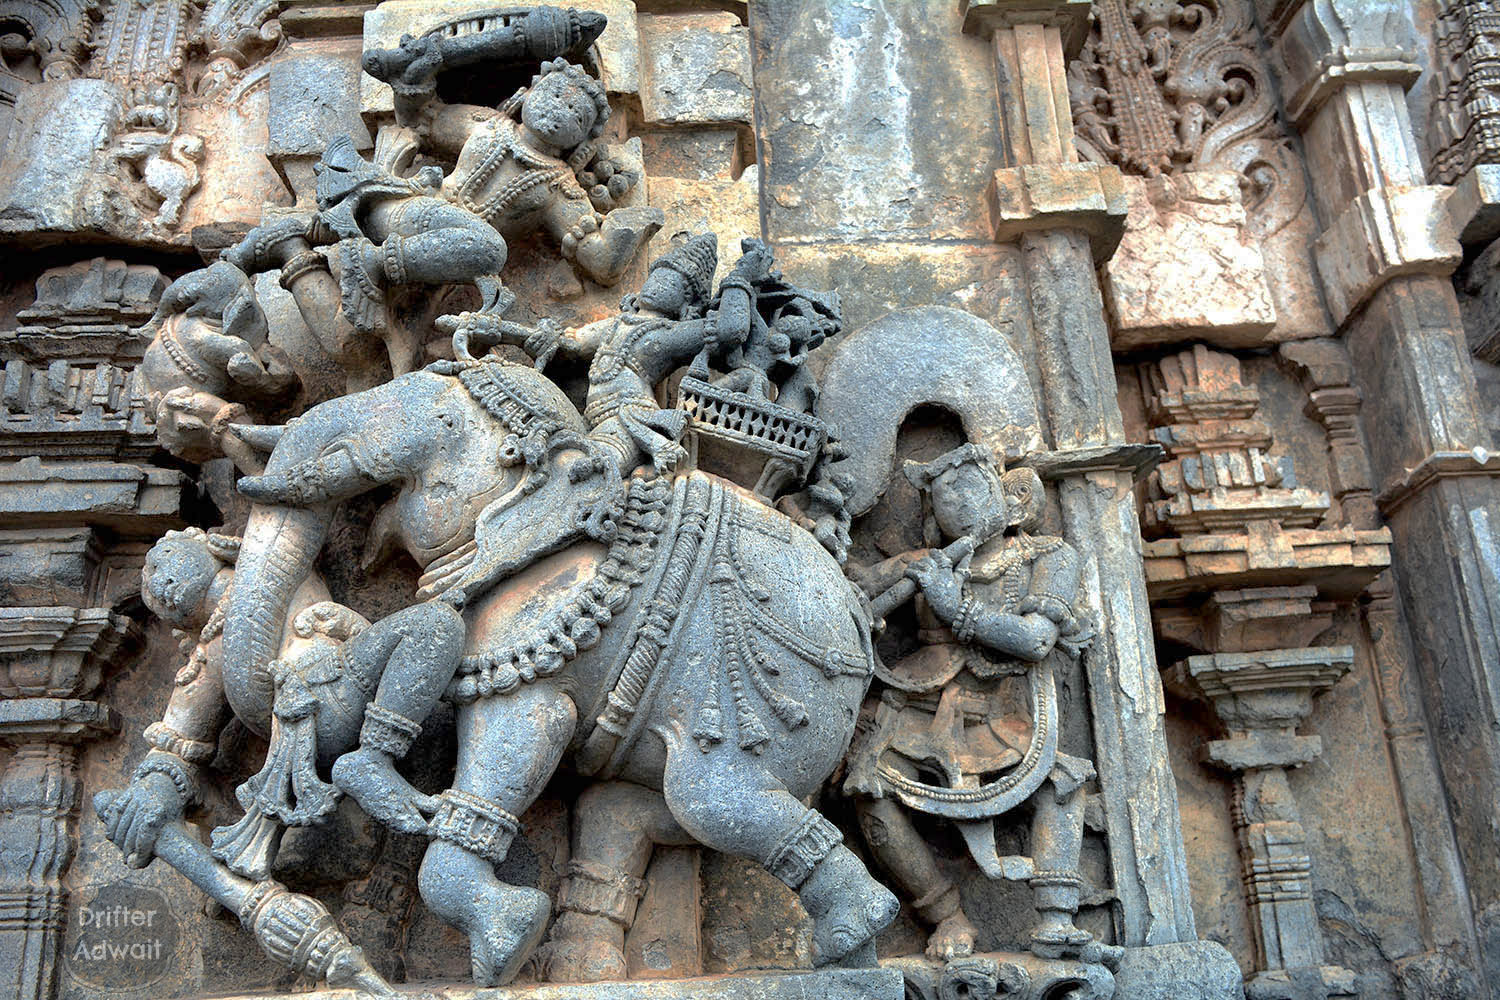 Arjuna, Bhima and Bhagadatta